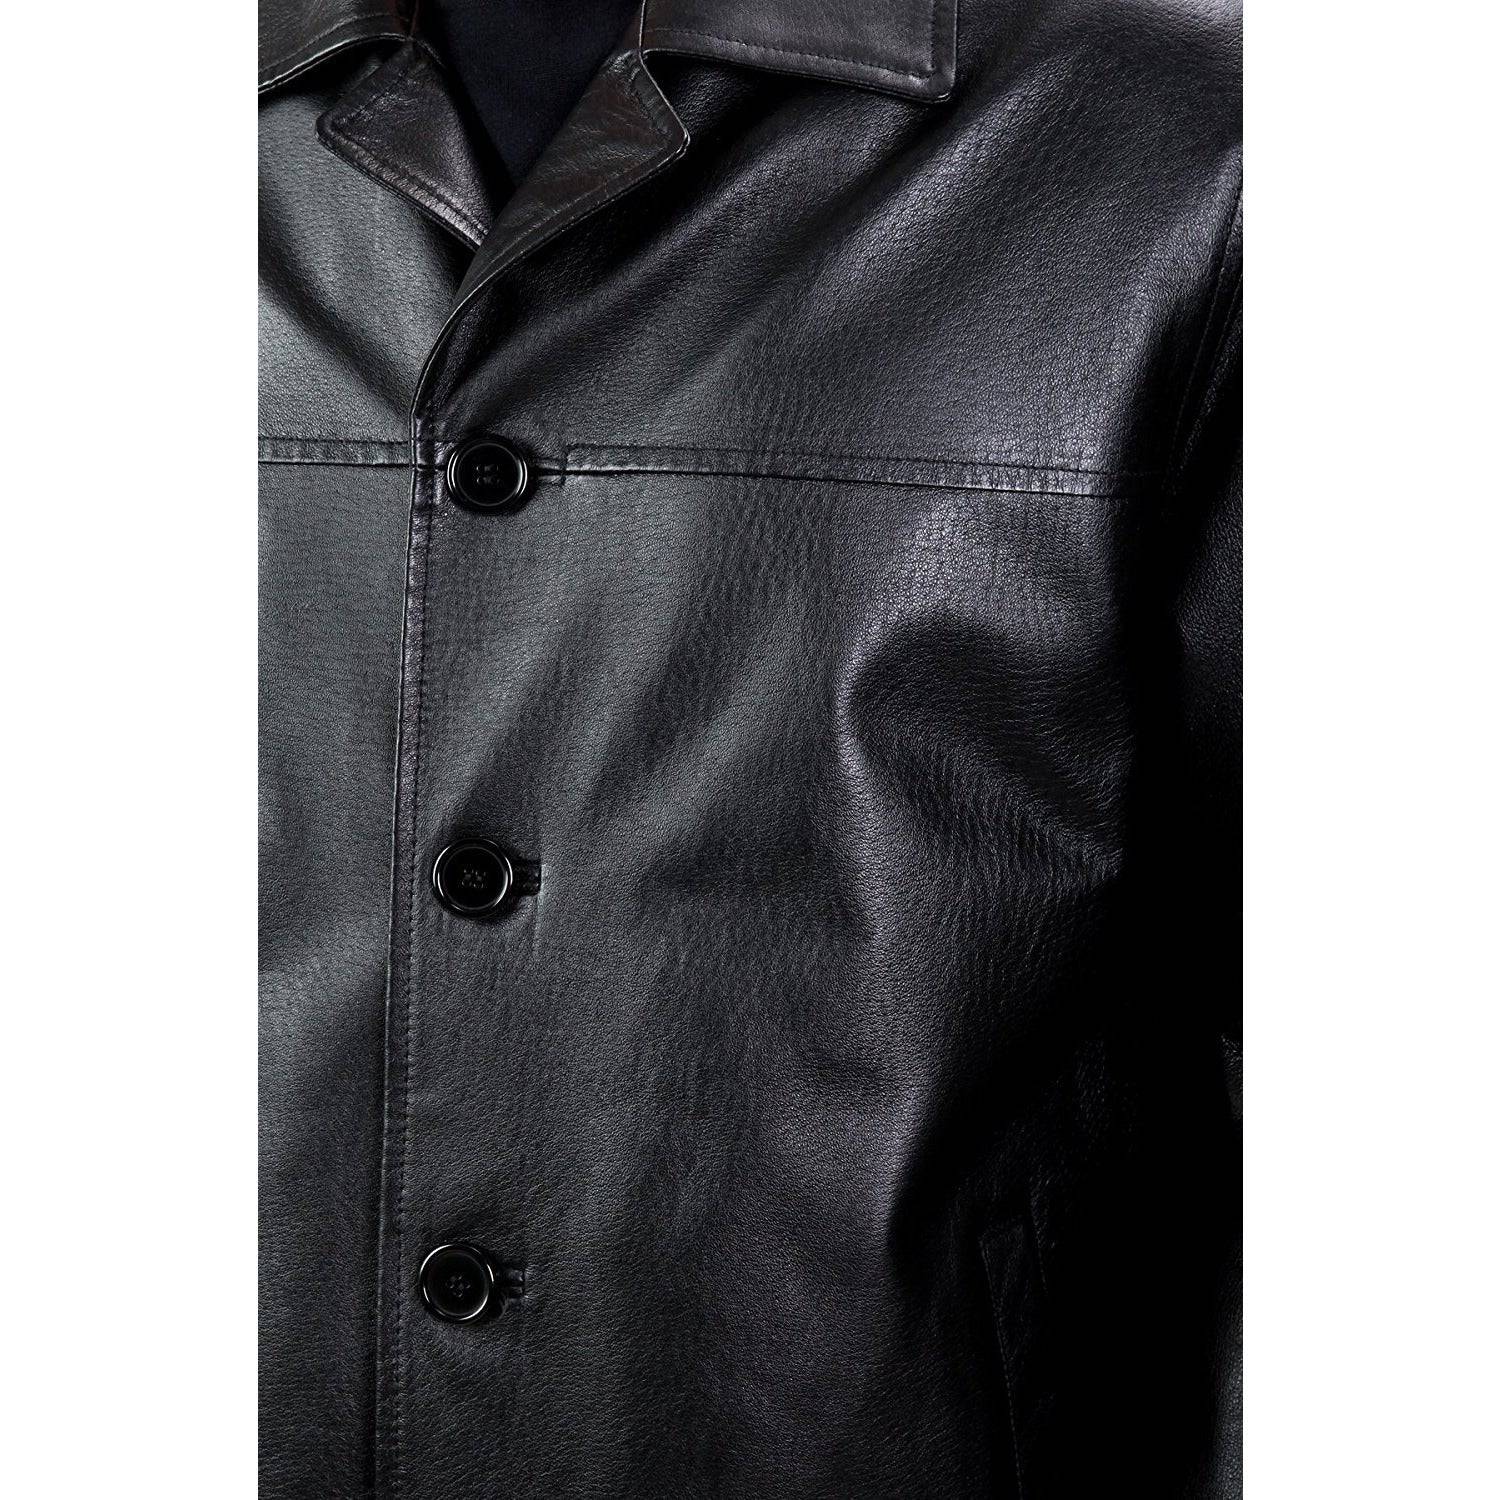 Ramonti Mens Classic Black Leather Car Coat - Zooloo Leather